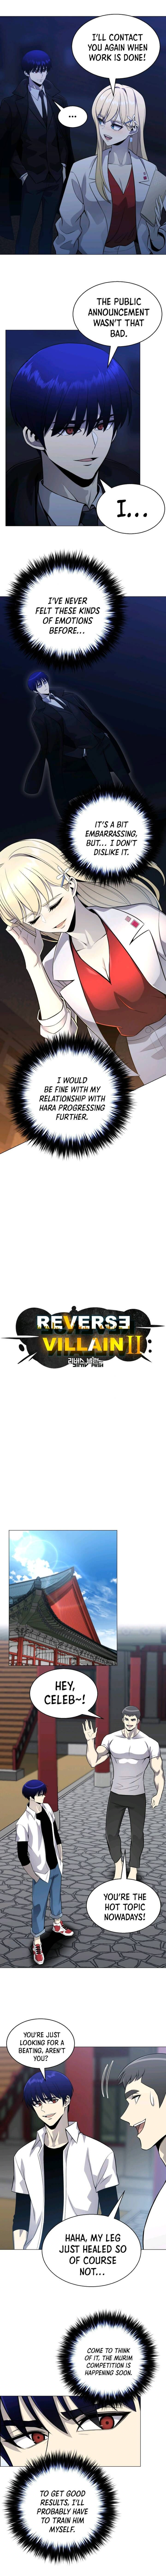 reverse_villain_66_3